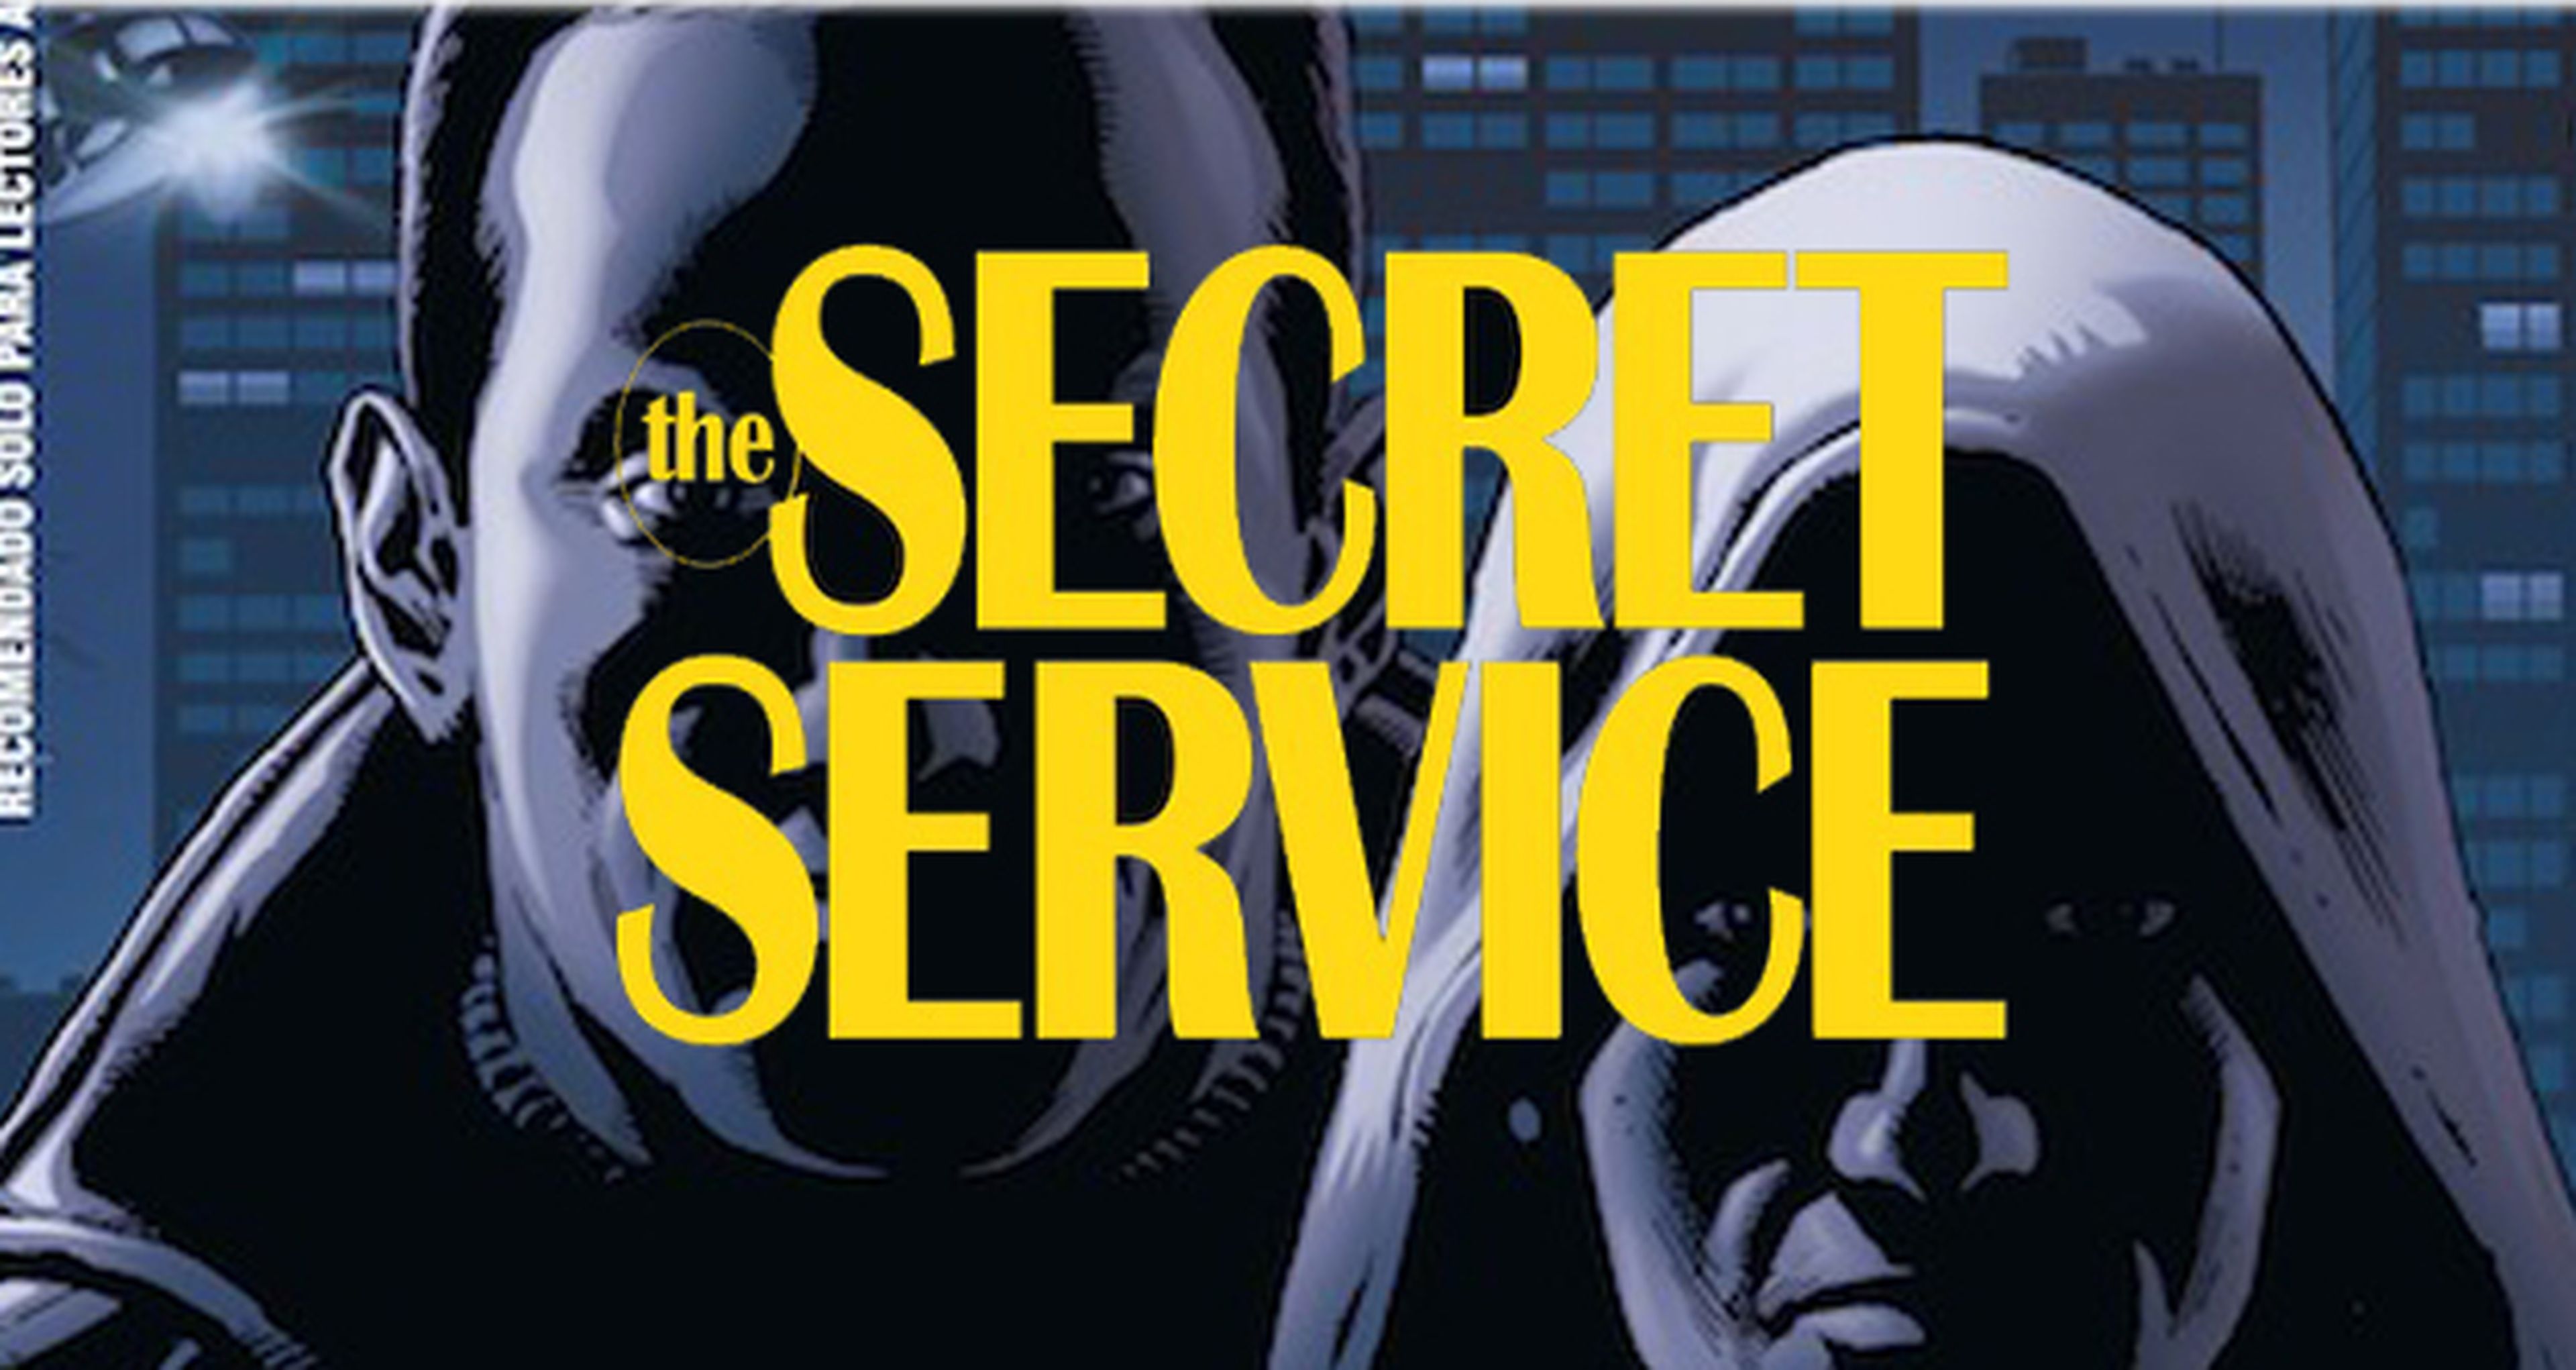 Panini publicará The Secret Service en octubre